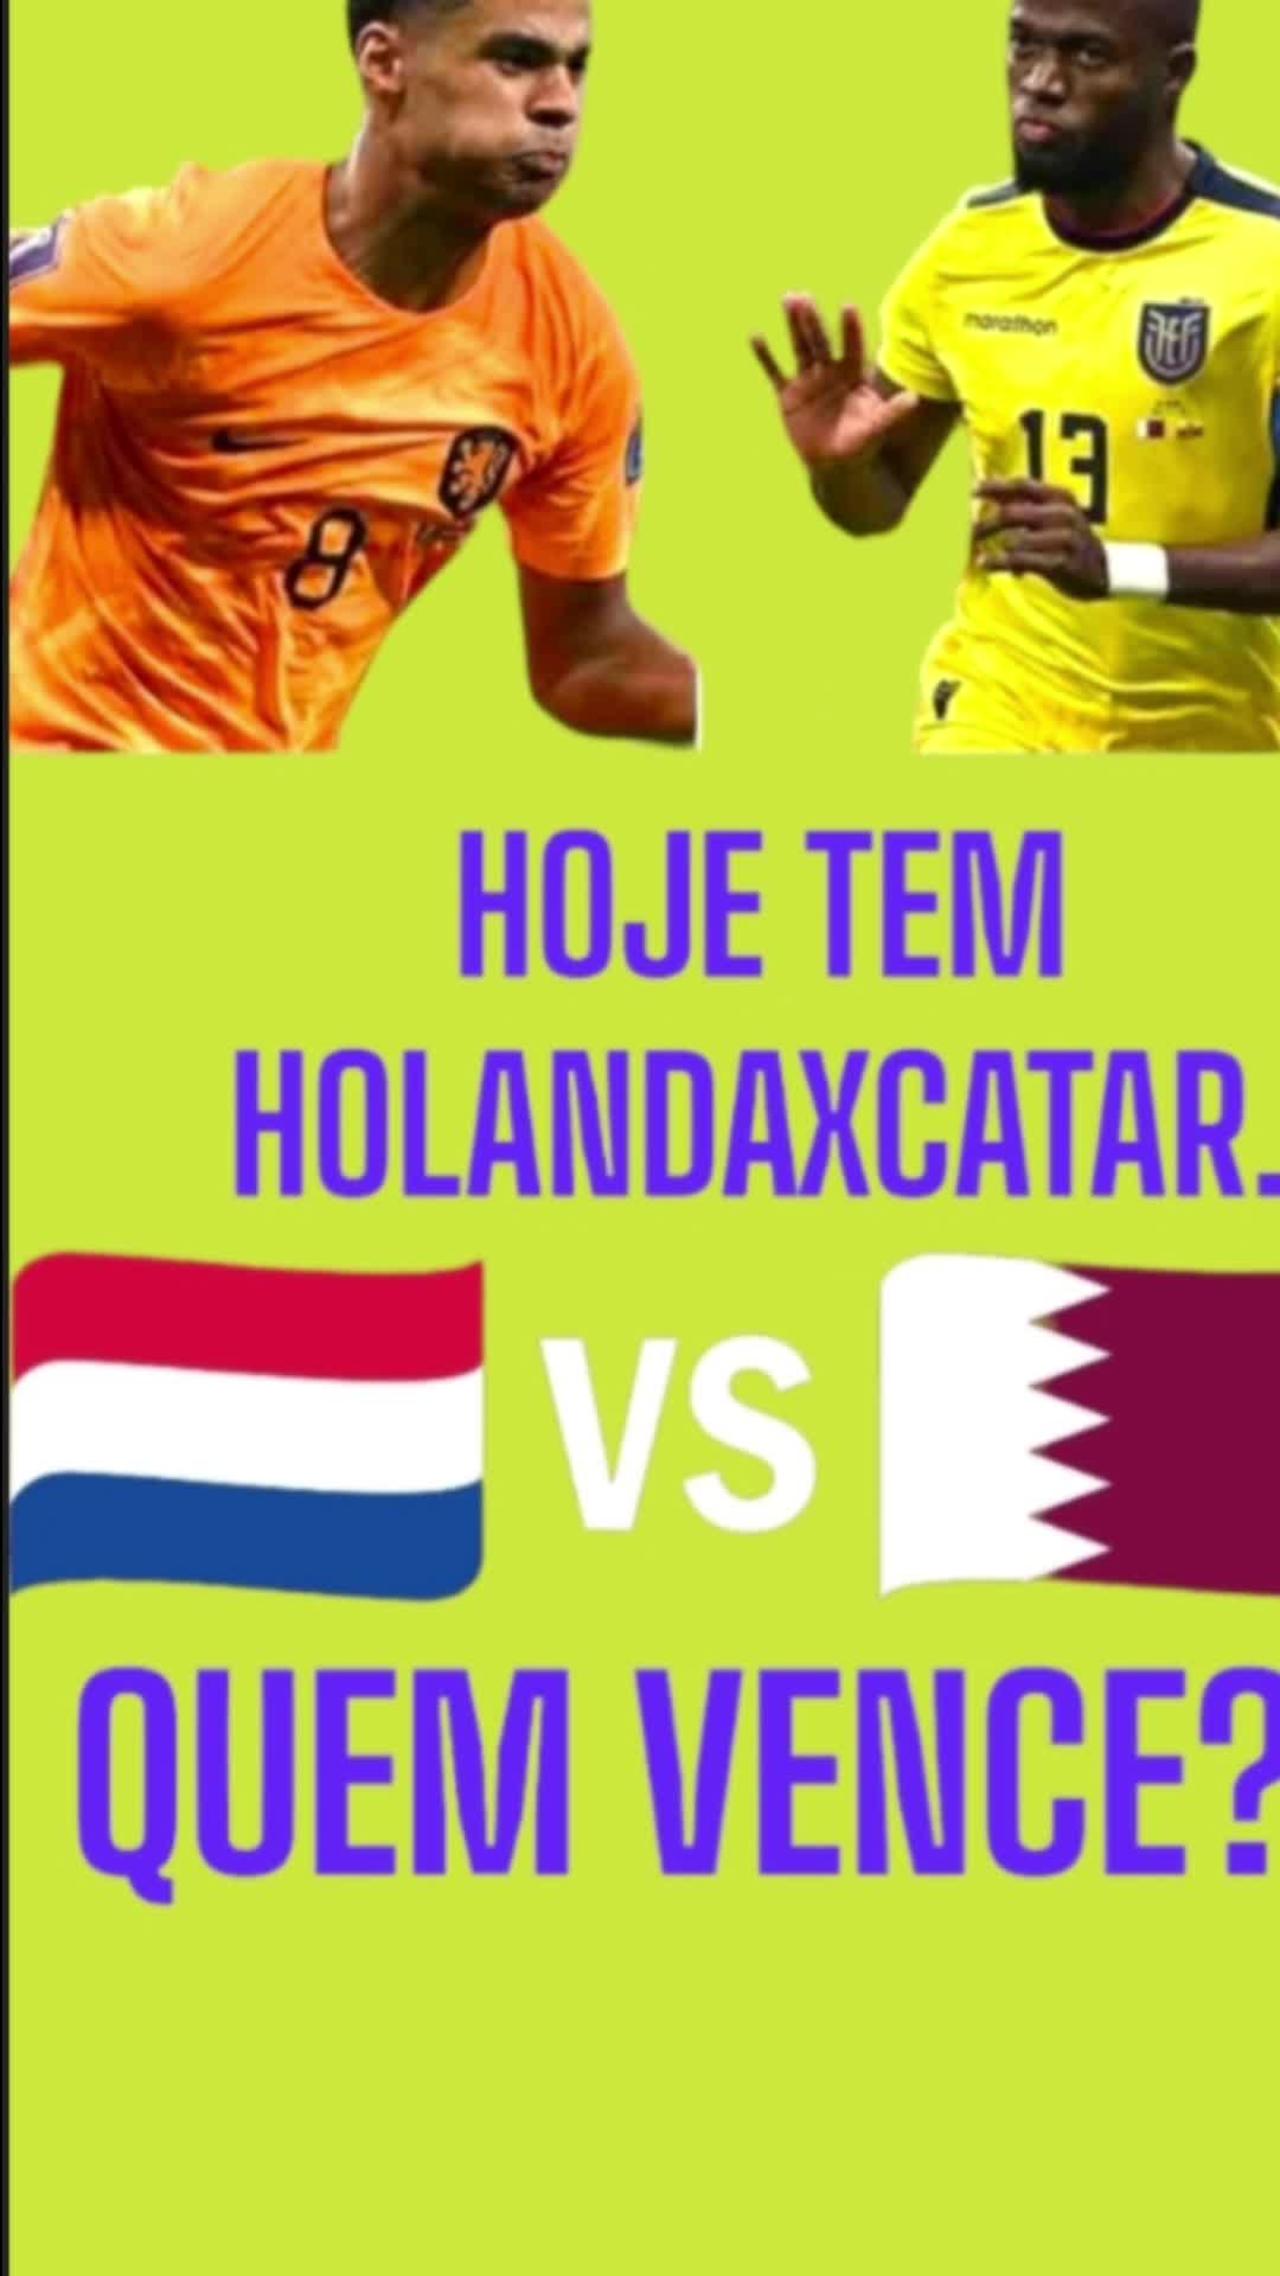 NETHERLANDS VS QATAR WHO WINS?